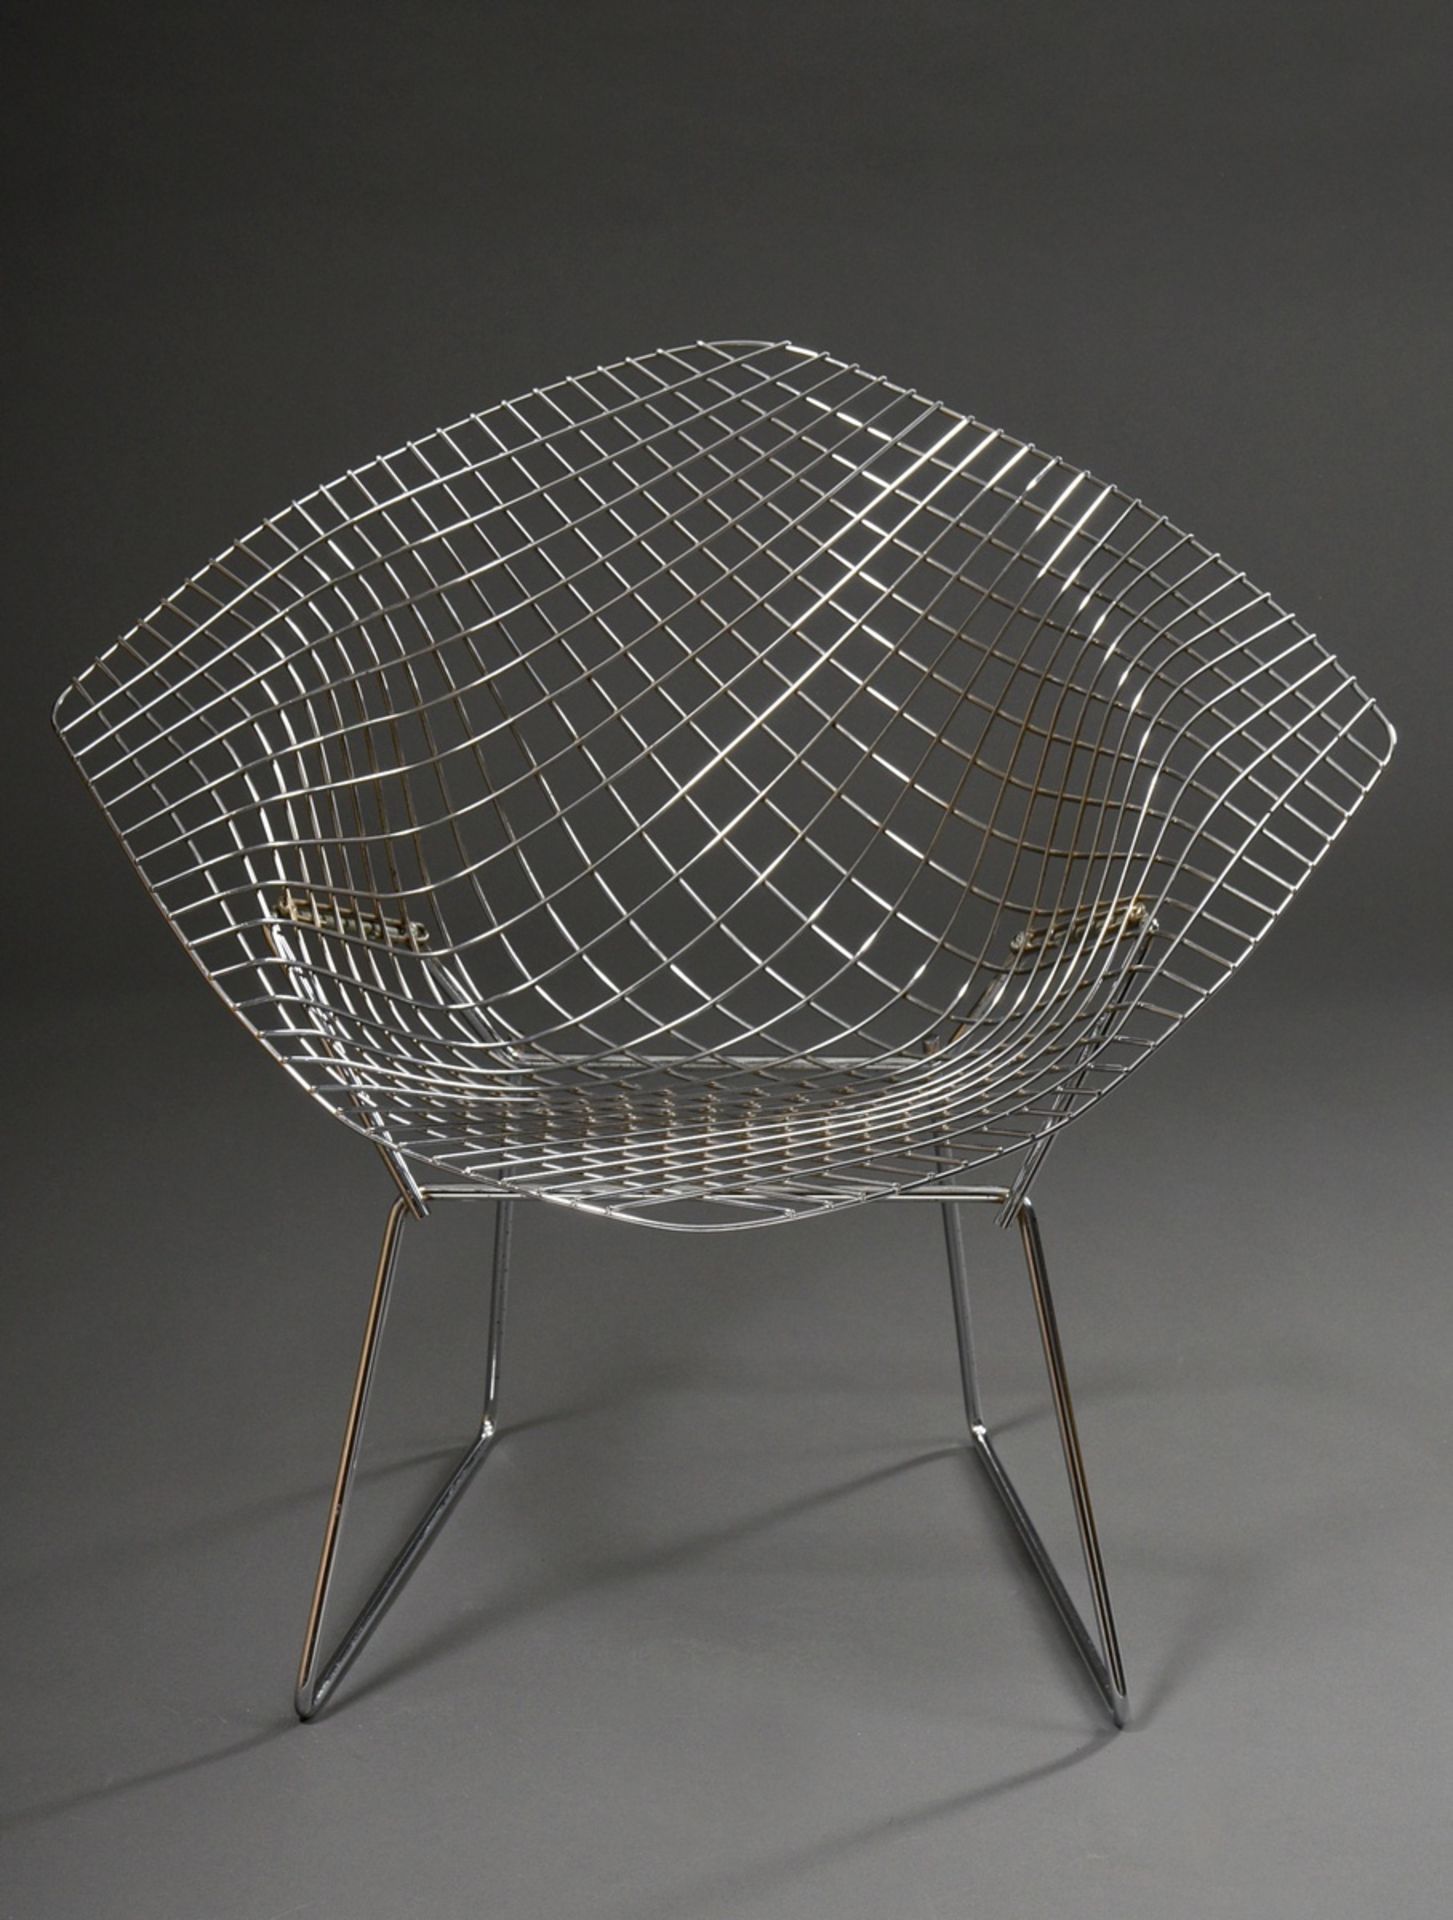 2 armchair "Diamond Chair", design: Harry Bertoia 1952 for Knoll International, chromed steel wire  - Image 3 of 7